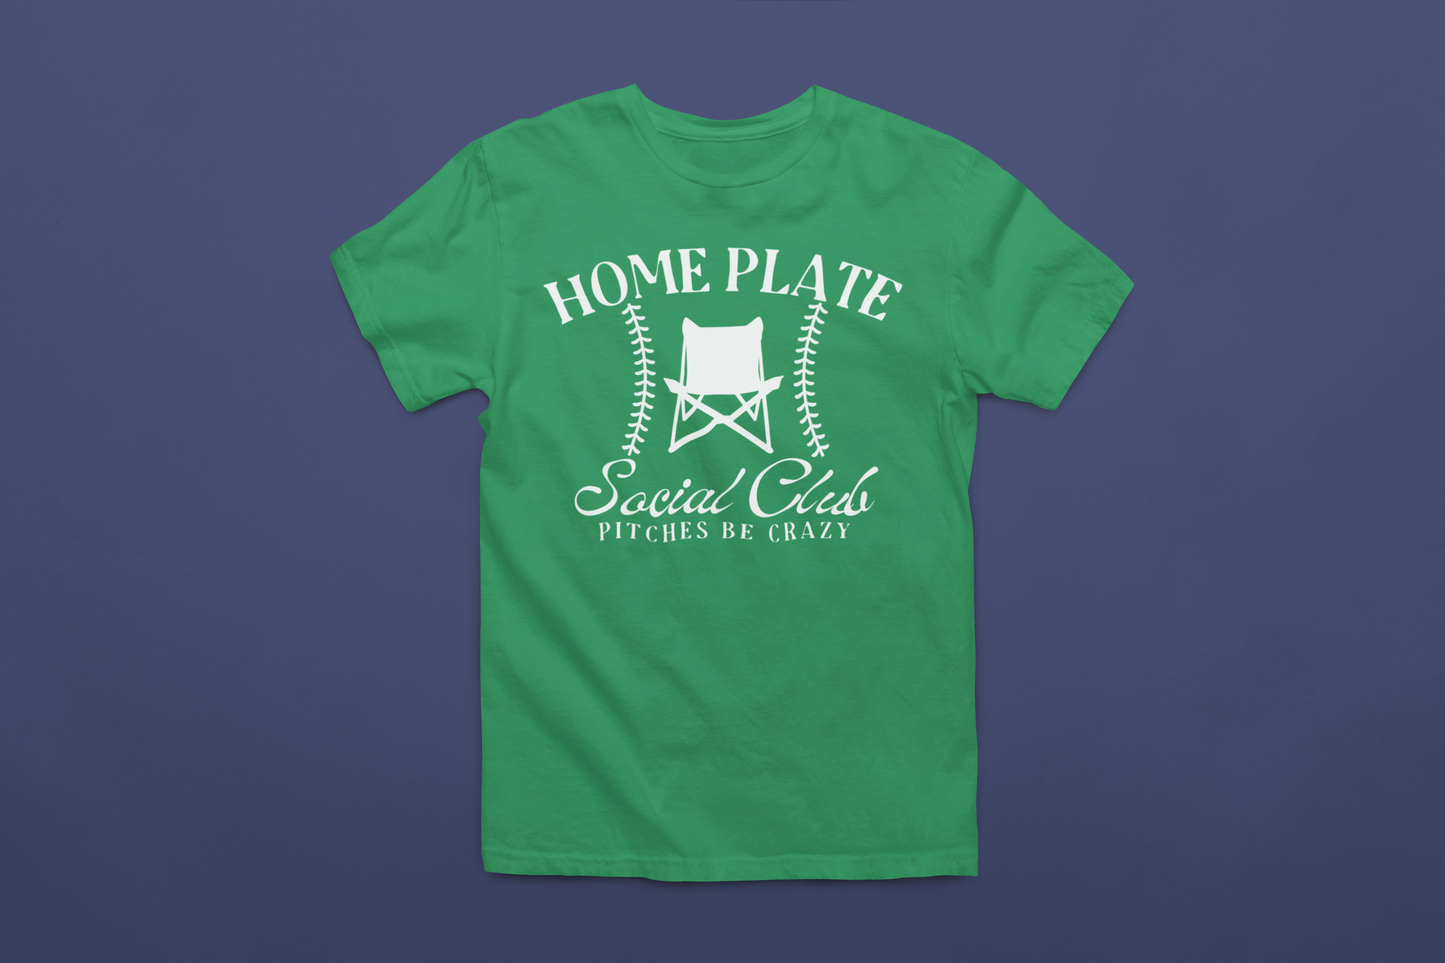 Home Plate Social Club T-Shirt